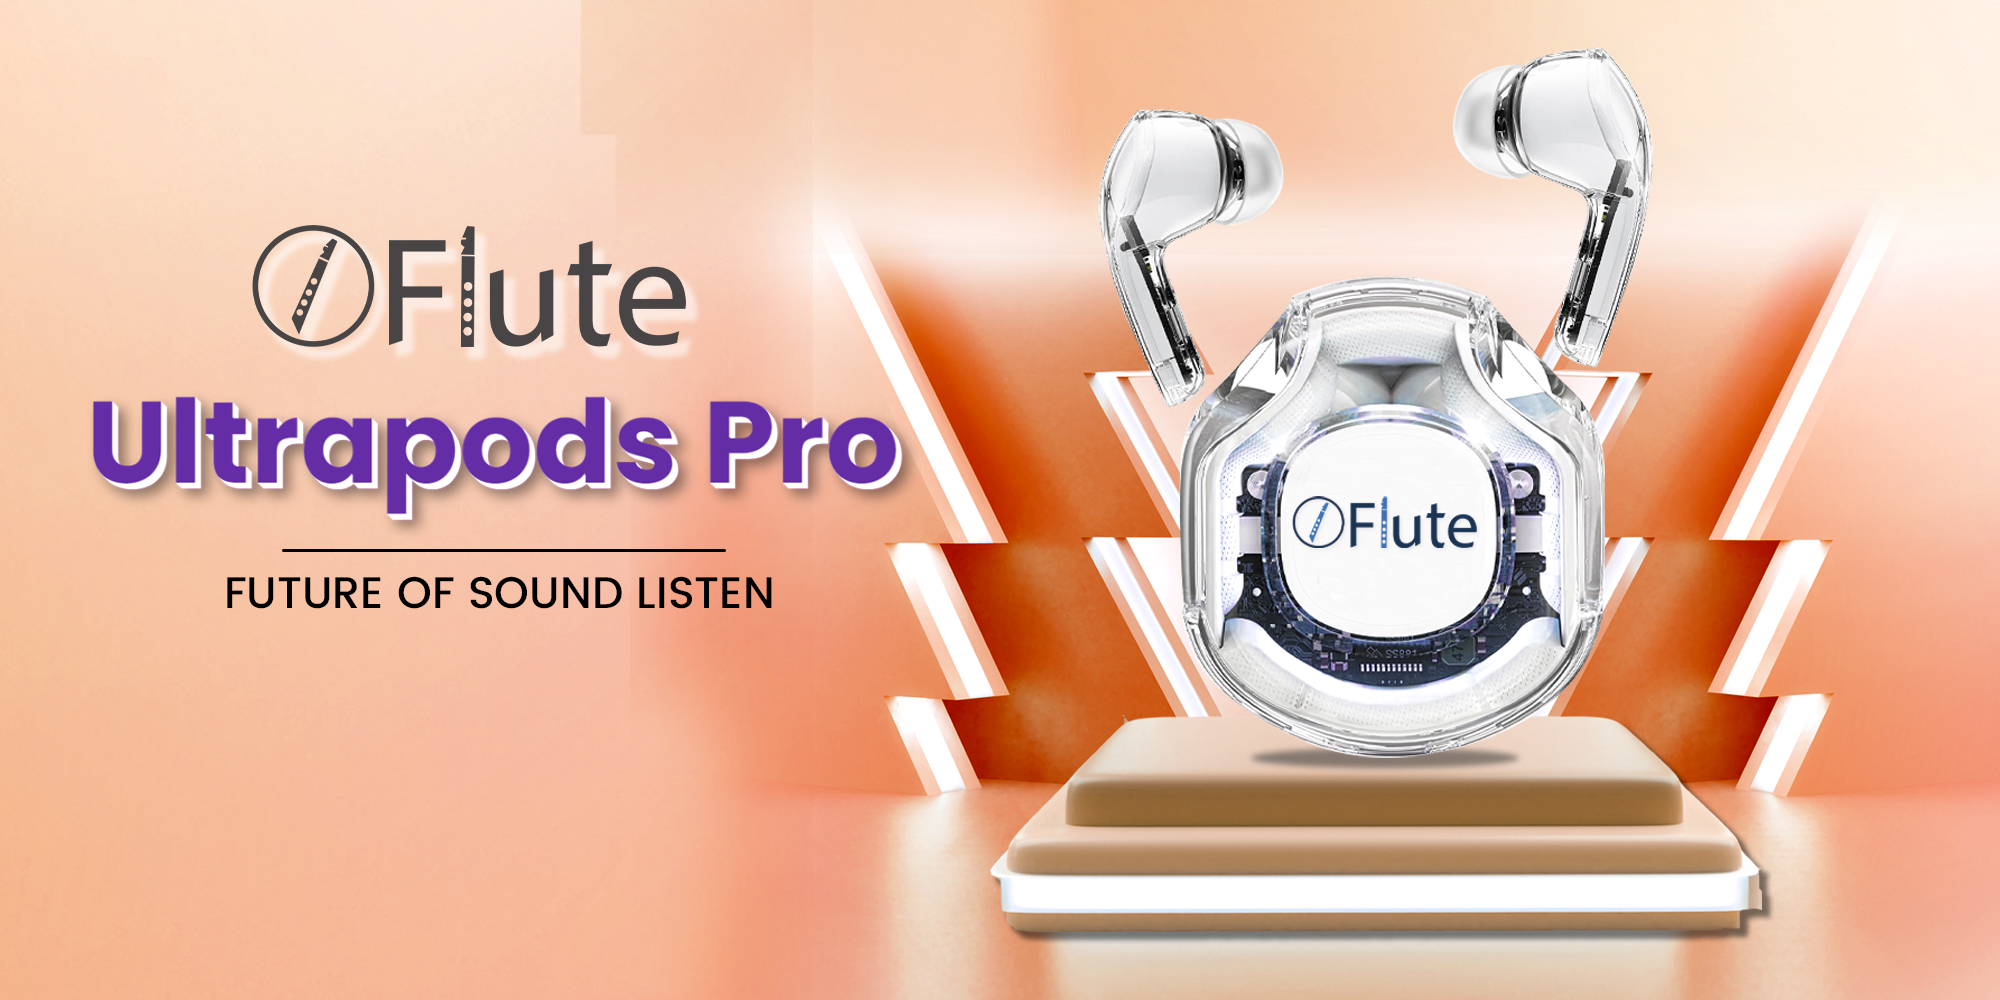 Flute Ultrapods Pro Wireless Earbuds – Pearl White